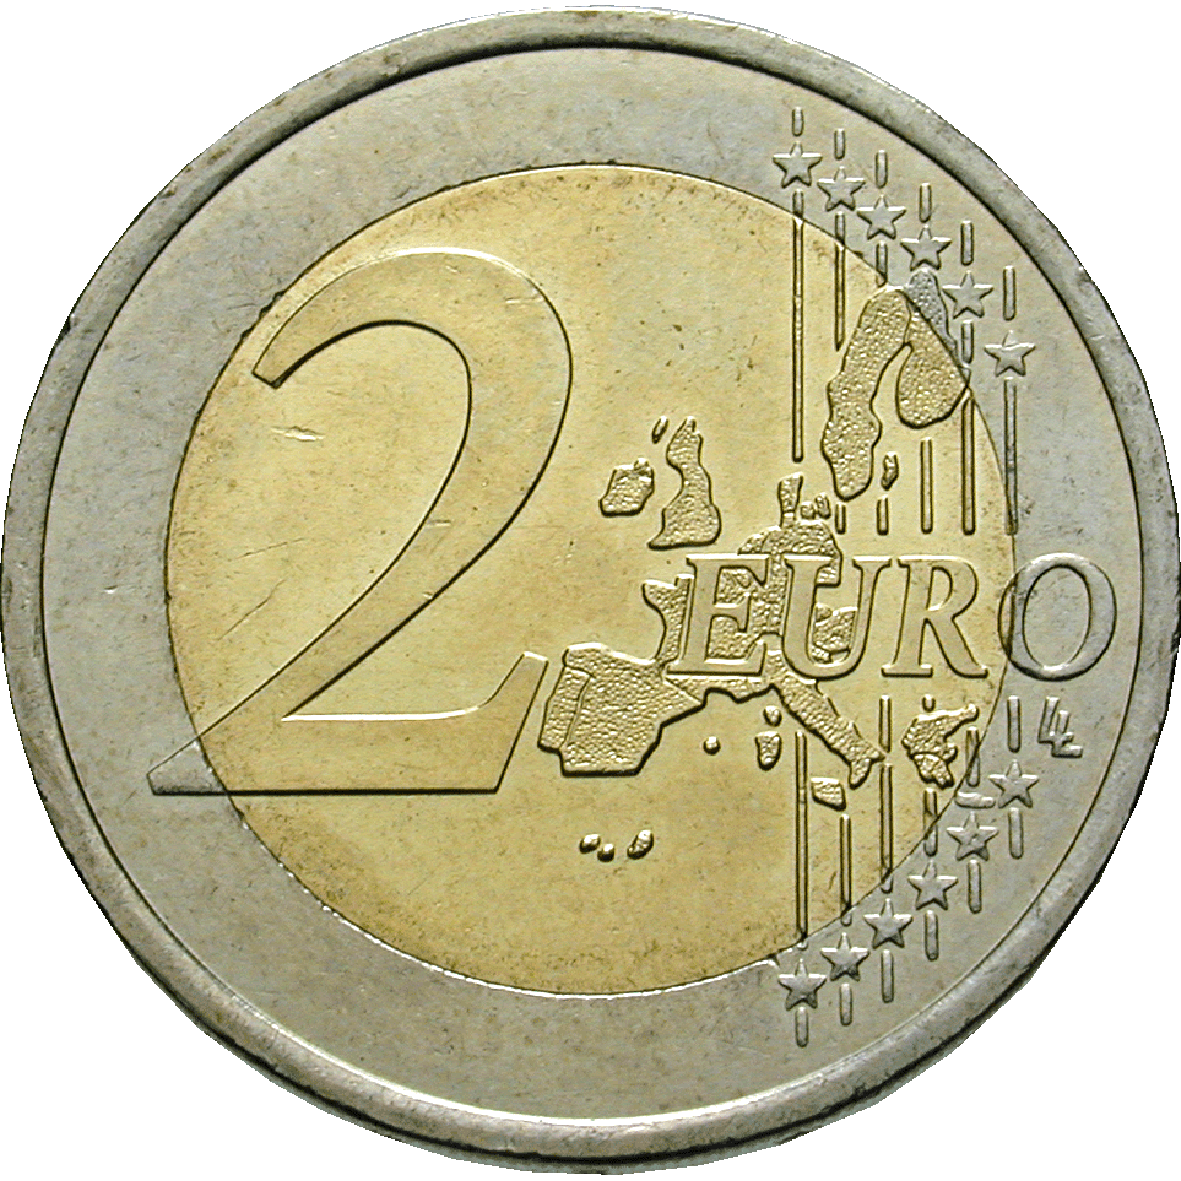 Republic of France, 2 Euros 2001 (obverse)